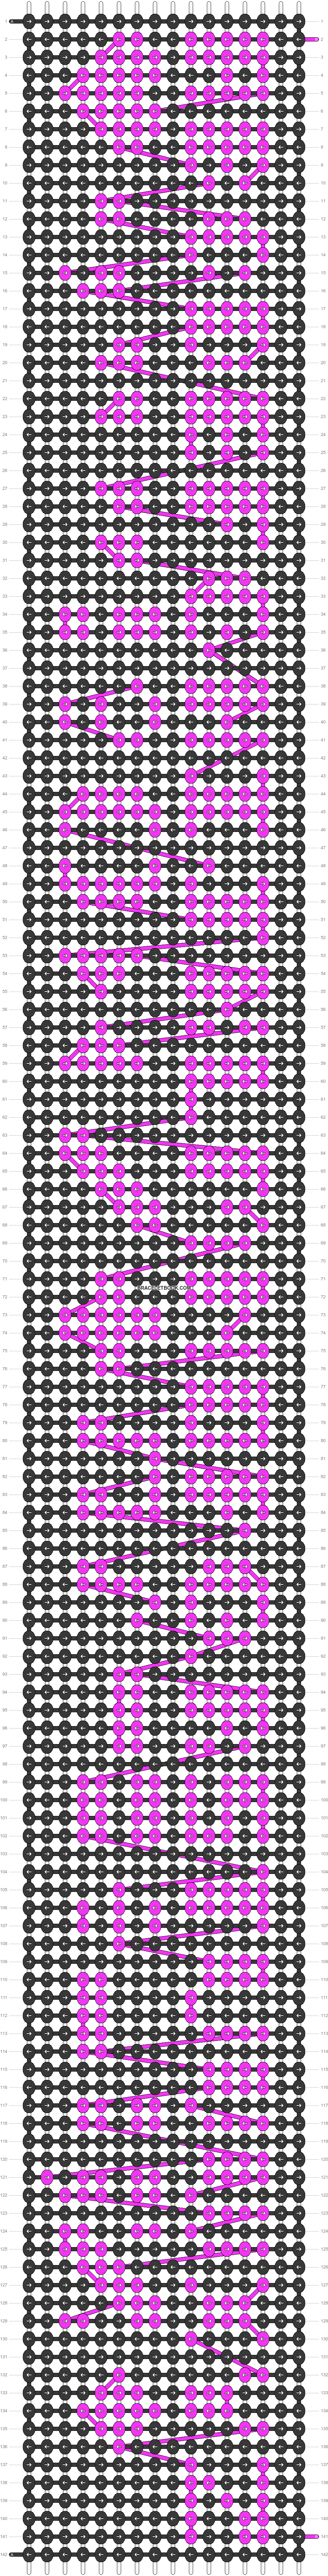 Alpha pattern #59423 variation #105326 pattern